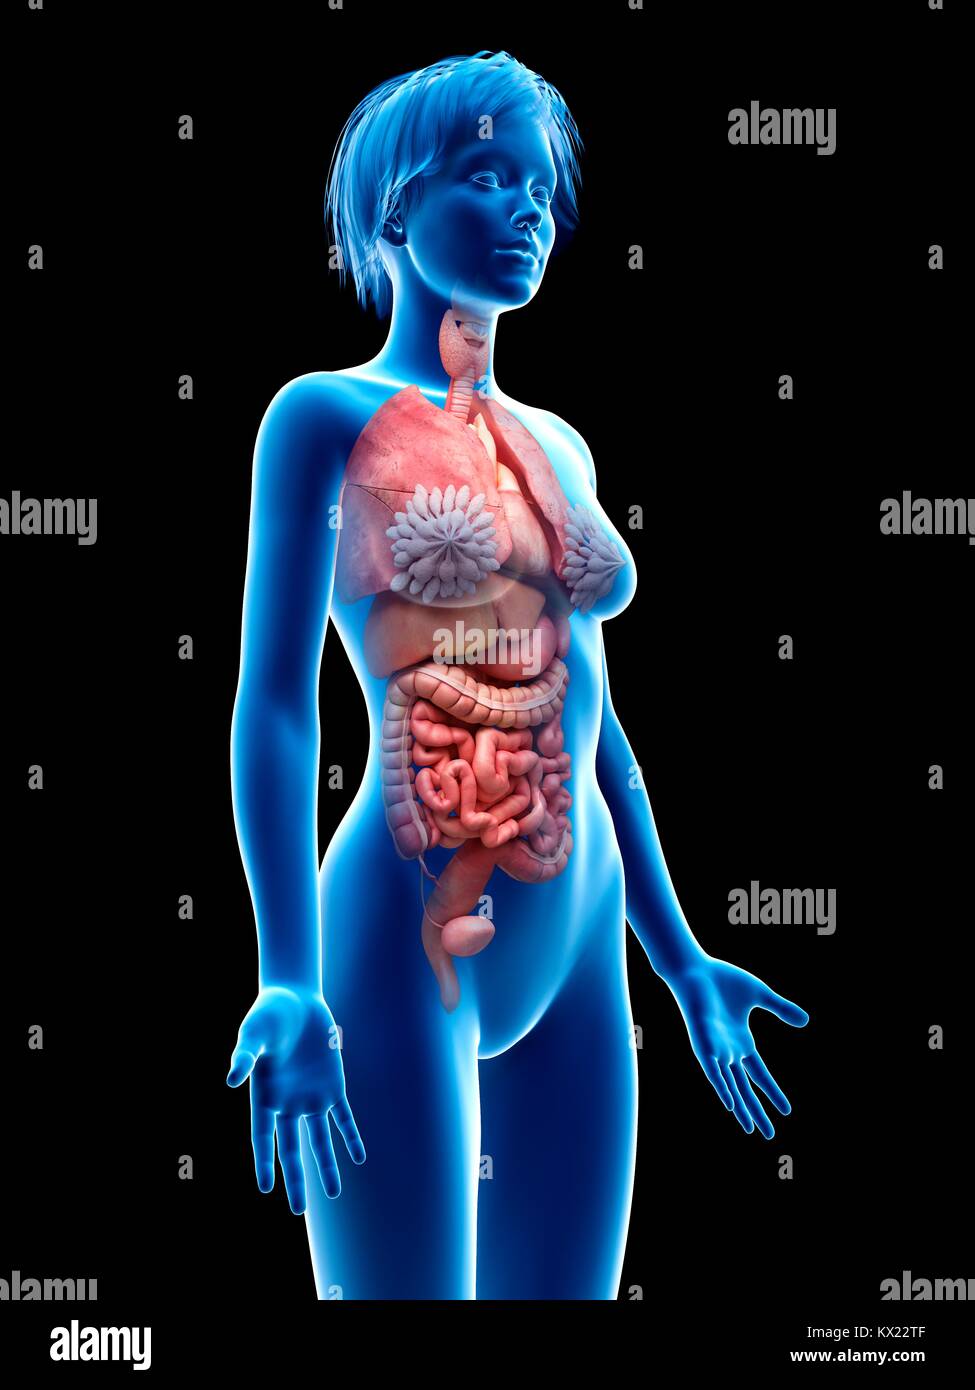 Female internal organs, illustration Stock Photo - Alamy